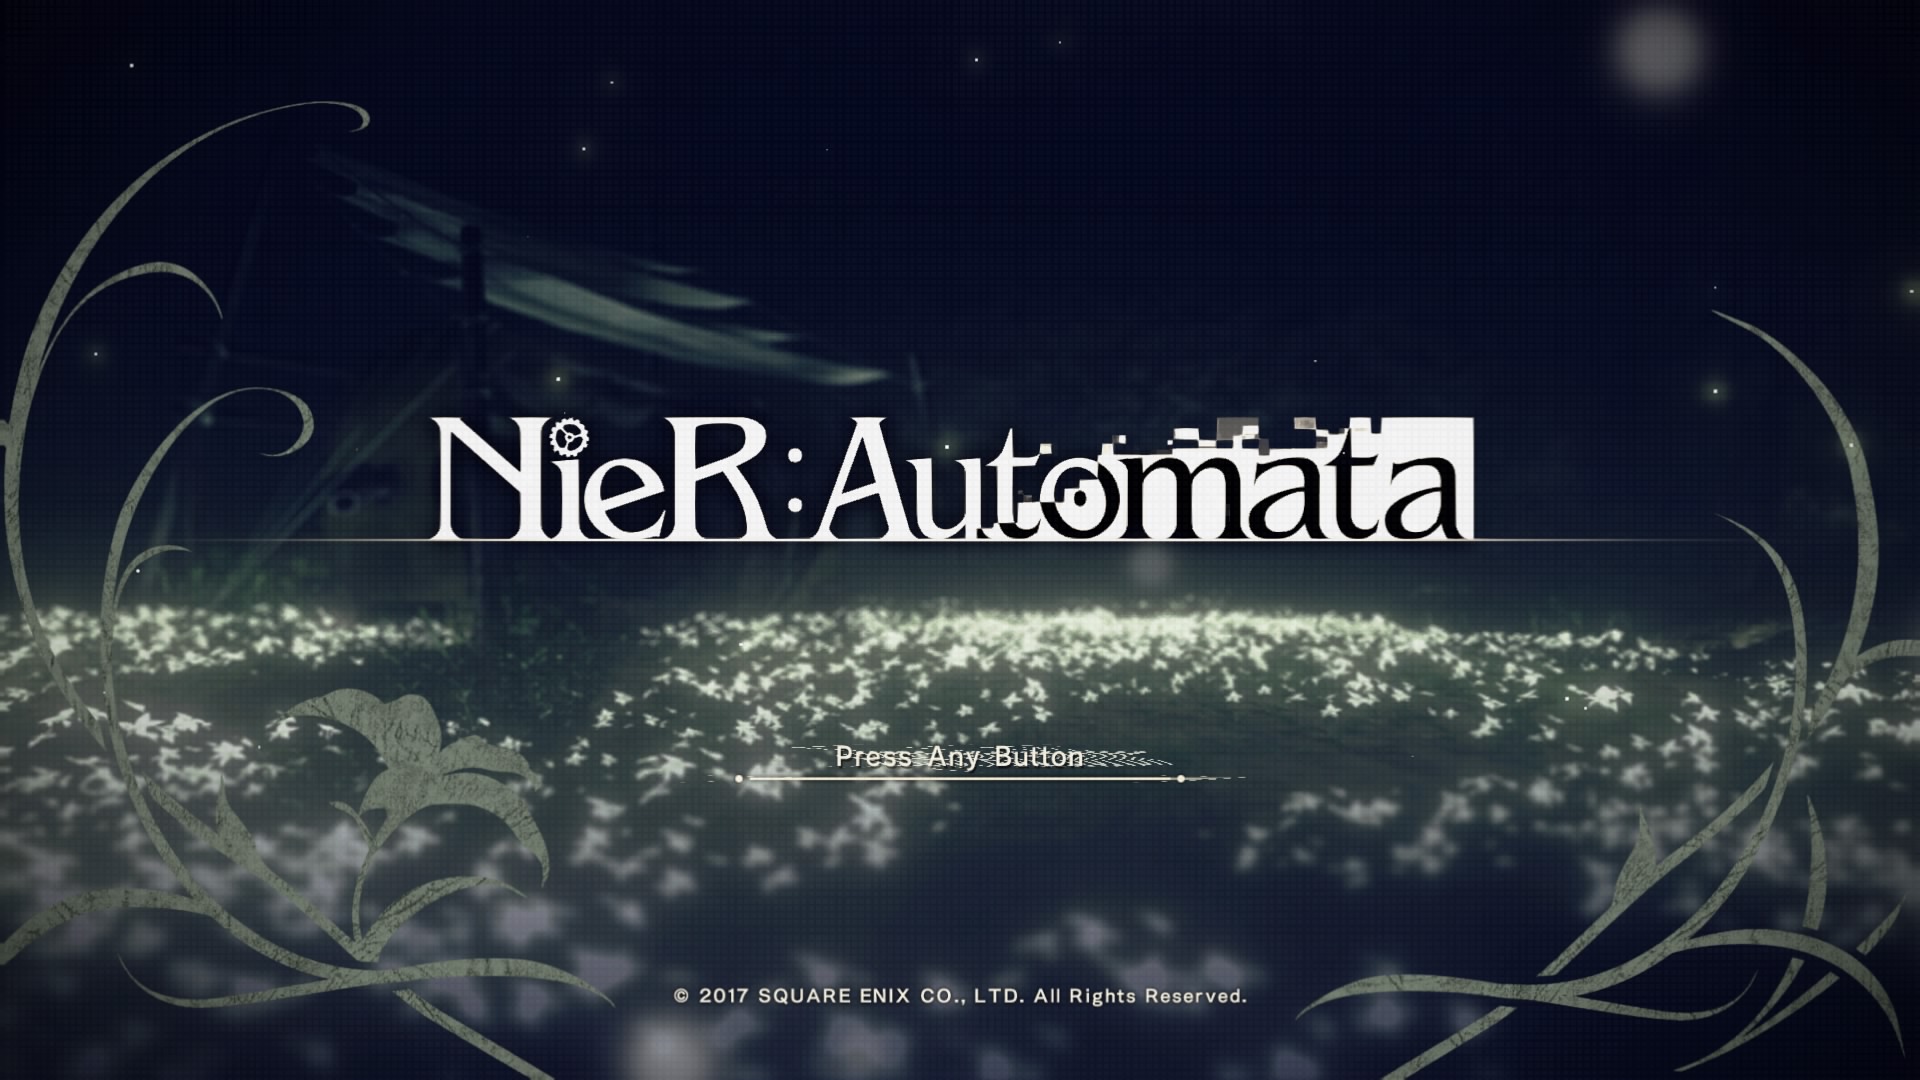 Nier Automata ニーア オートマタ プレイ日記 16 ぶるへくのゲームプレイ日記